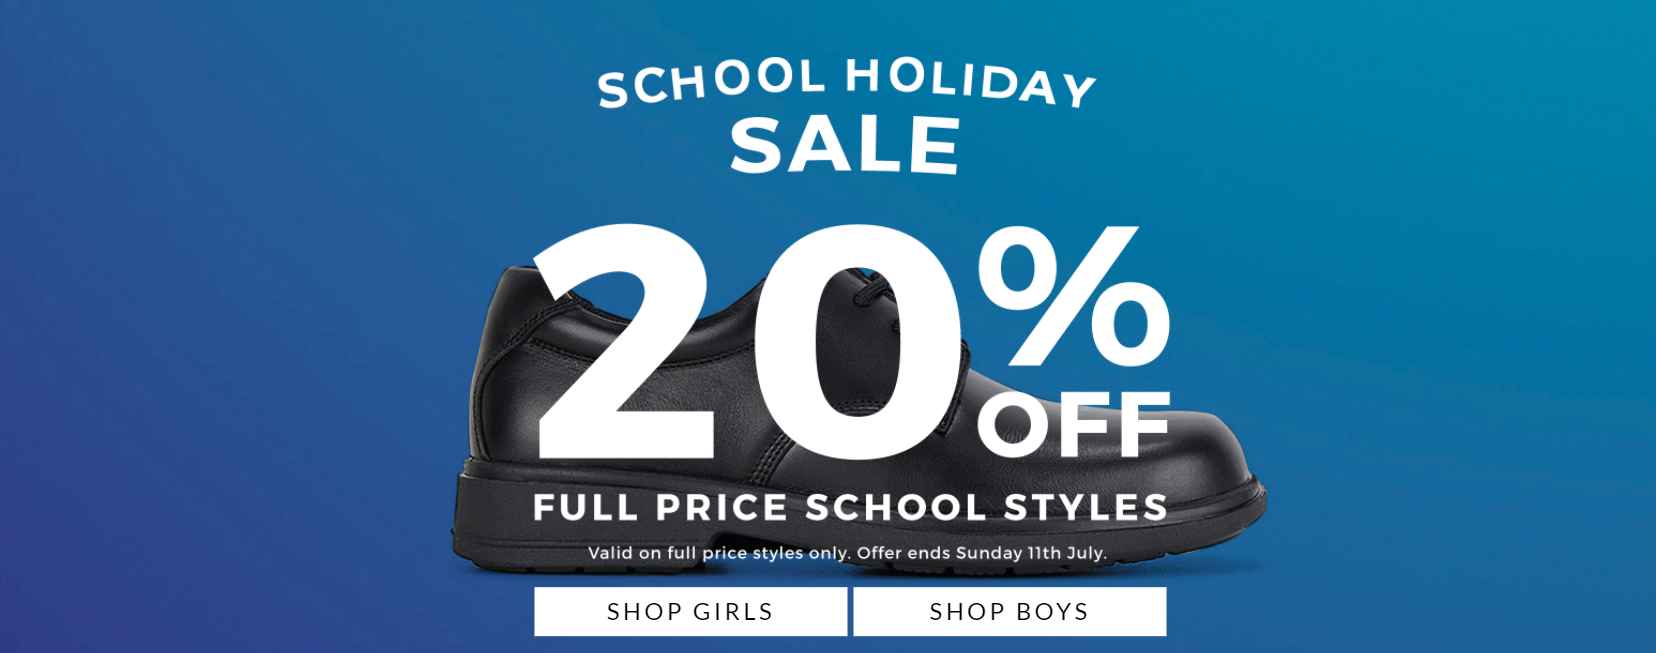 20% OFF full price school styles